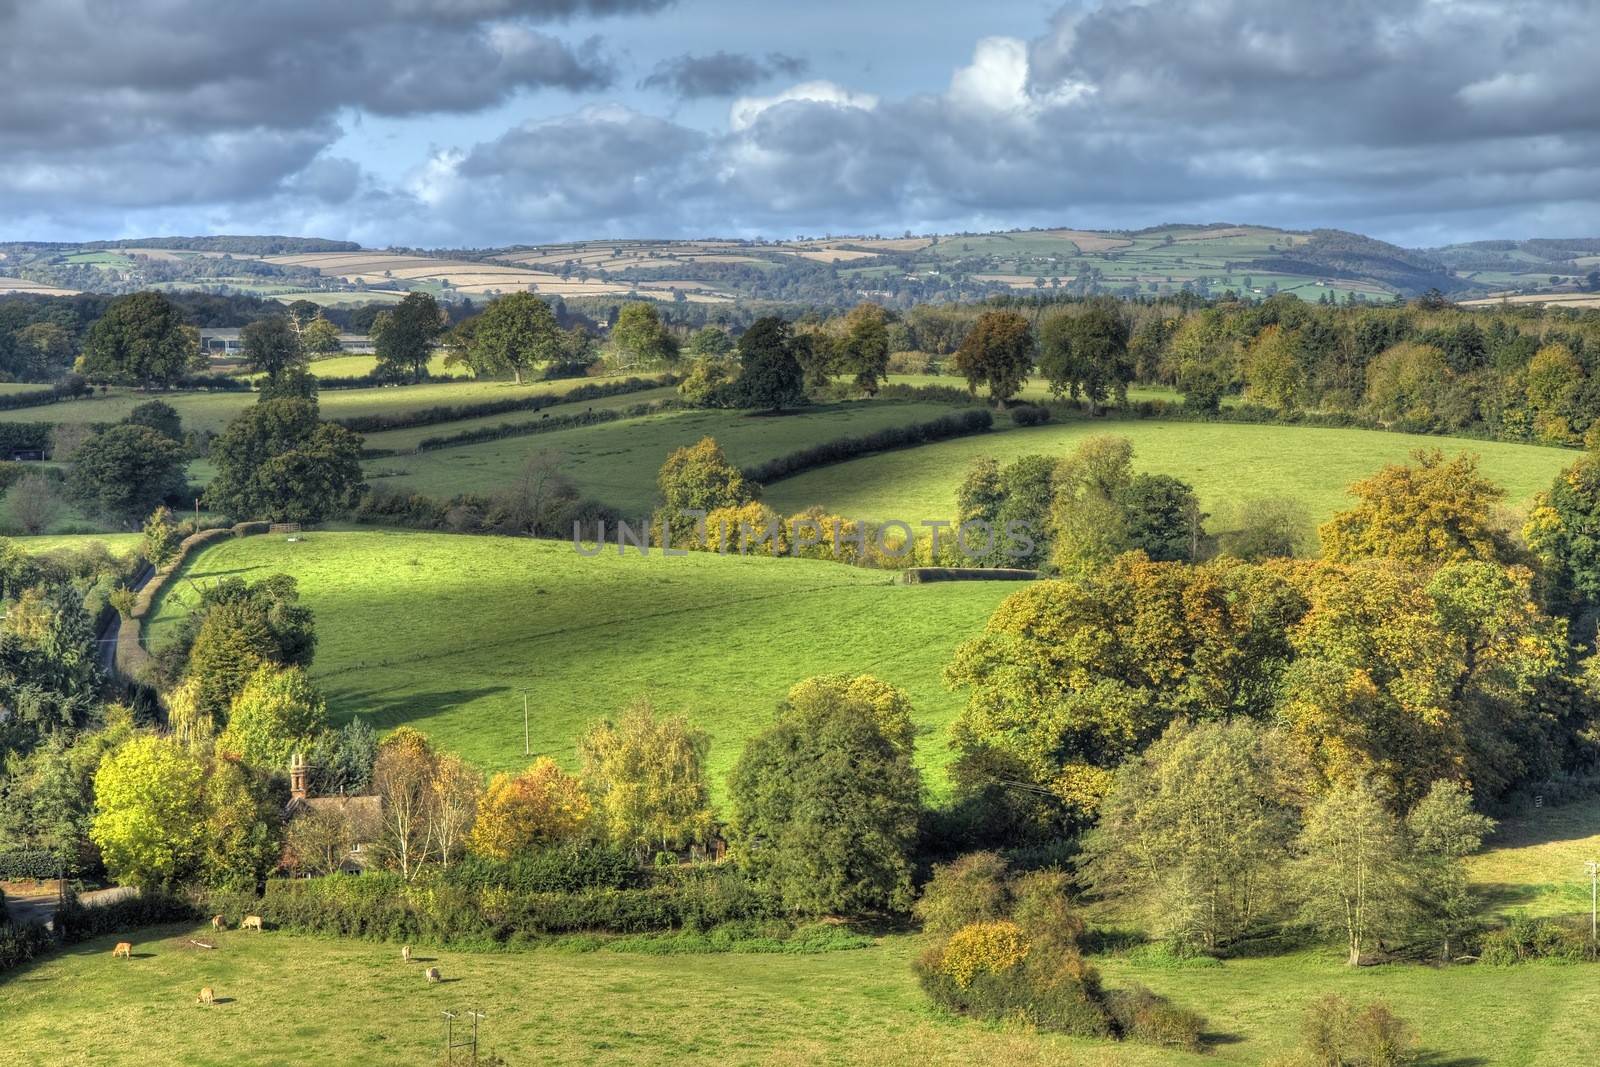 Shropshire countryside near Ludlow, England.